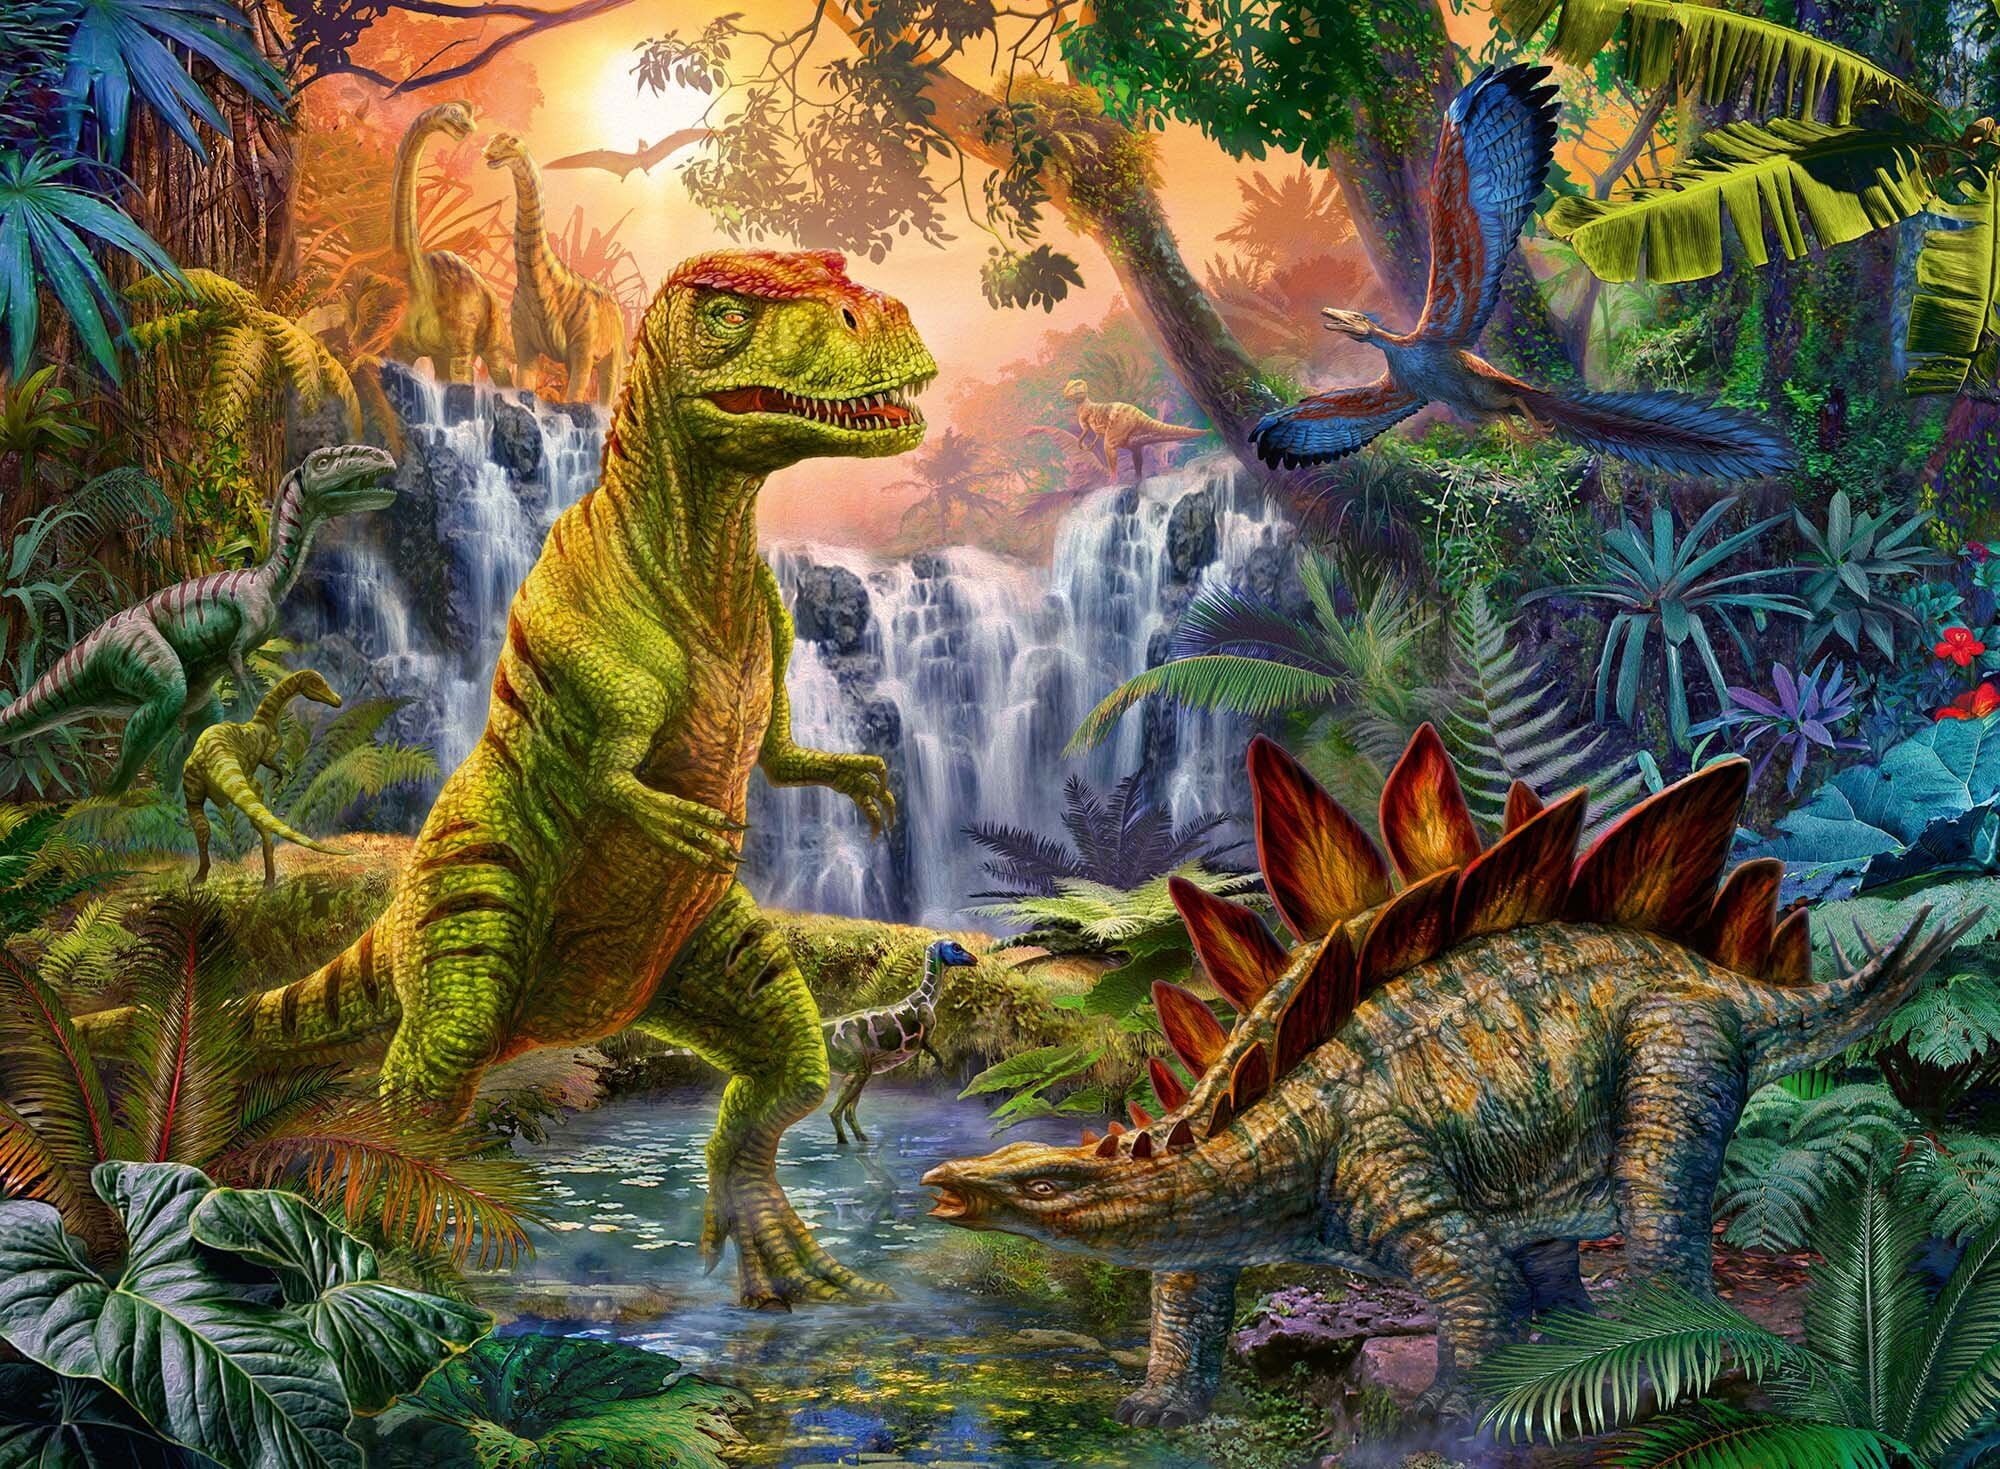 Ravensburger Puzzel - Dinosaurus oase 100 stukjes XXL